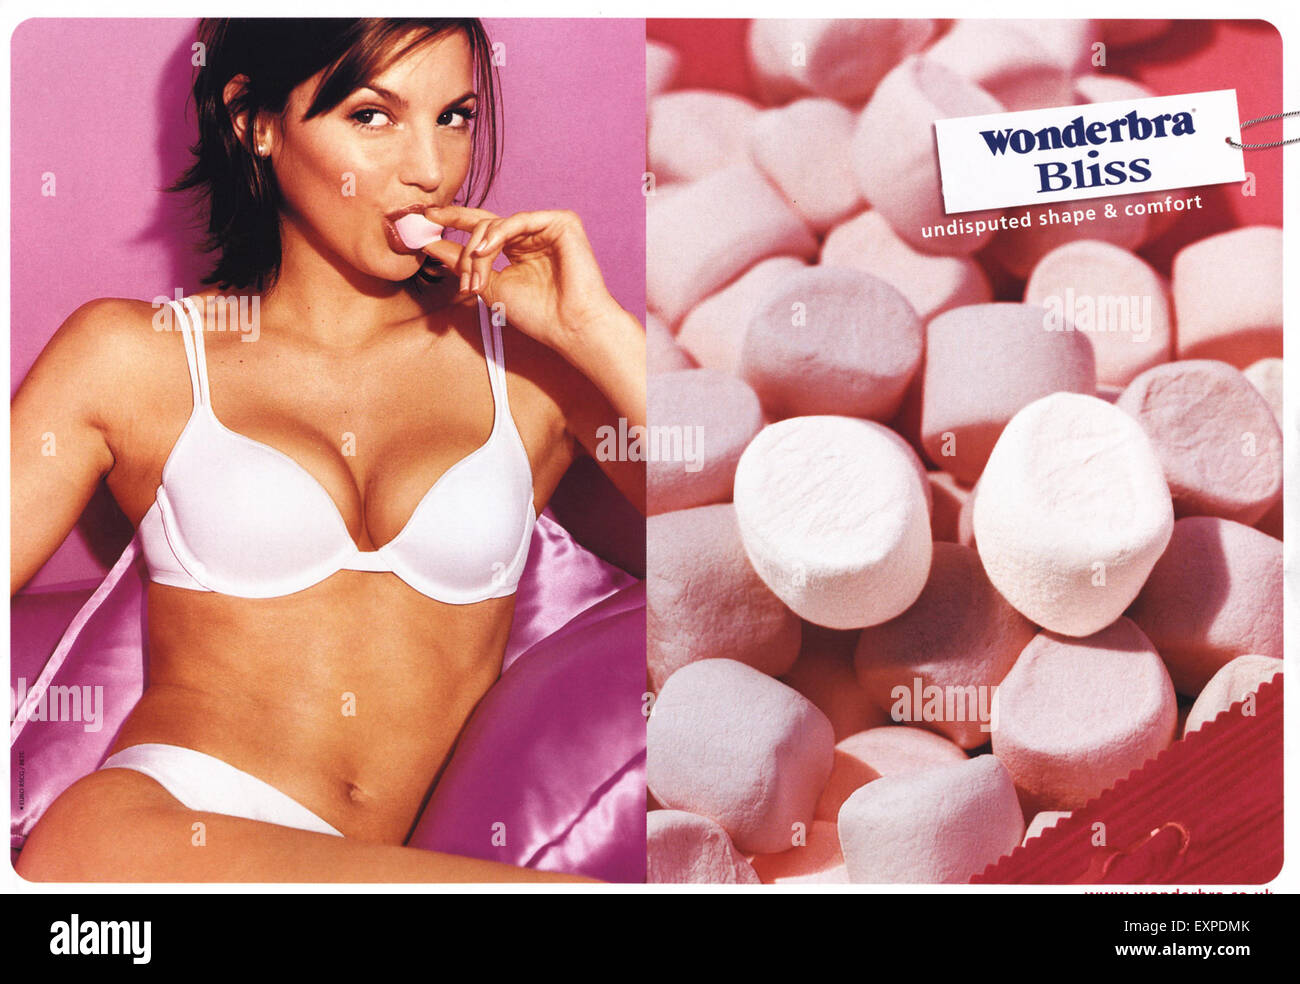 2000s UK Wonderbra Magazine Advert Stock Photo - Alamy